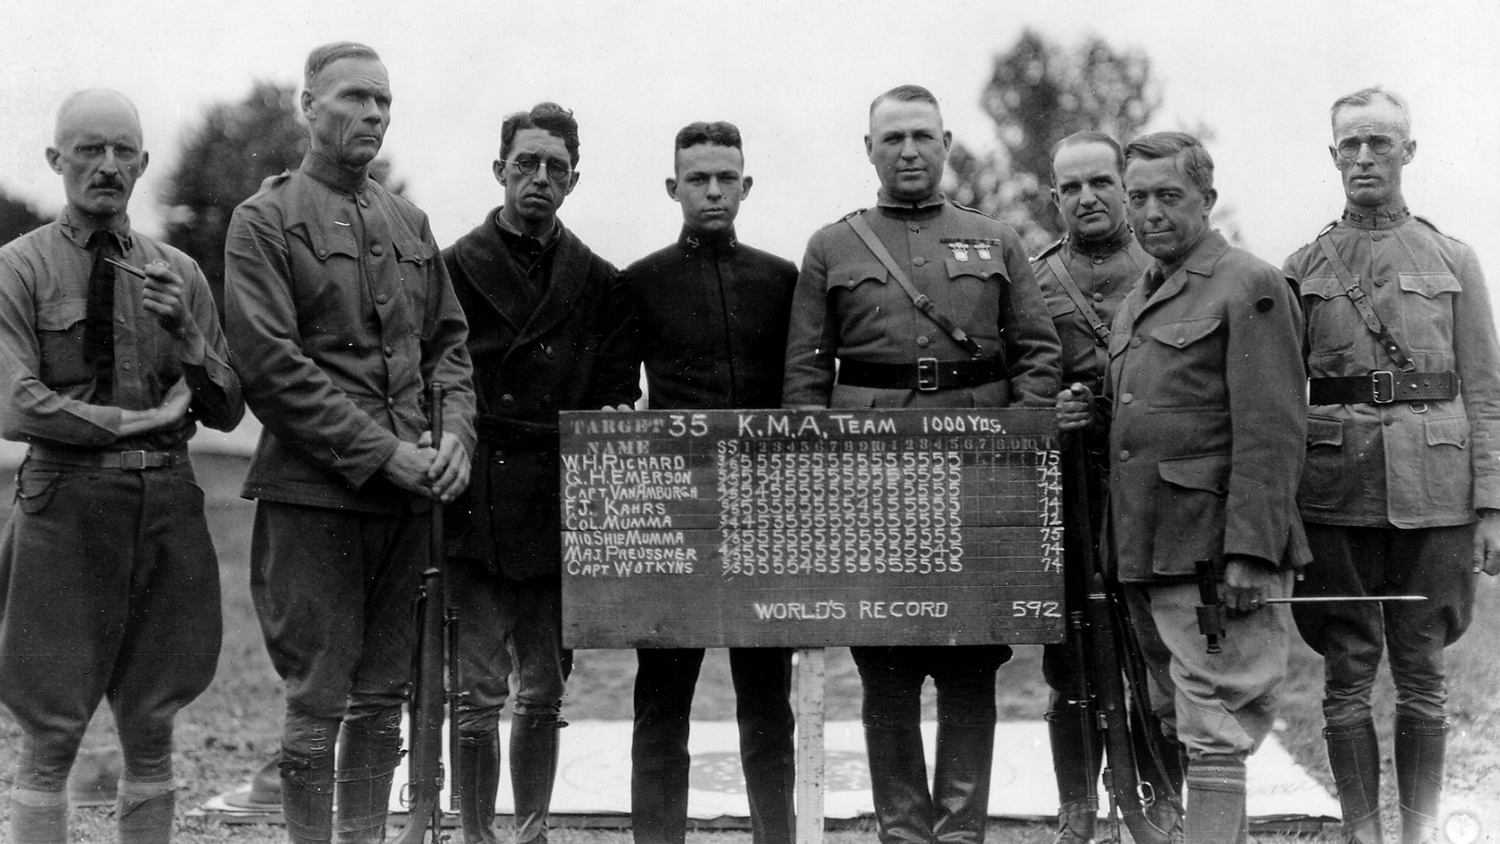 K.M.A. Team, 1922